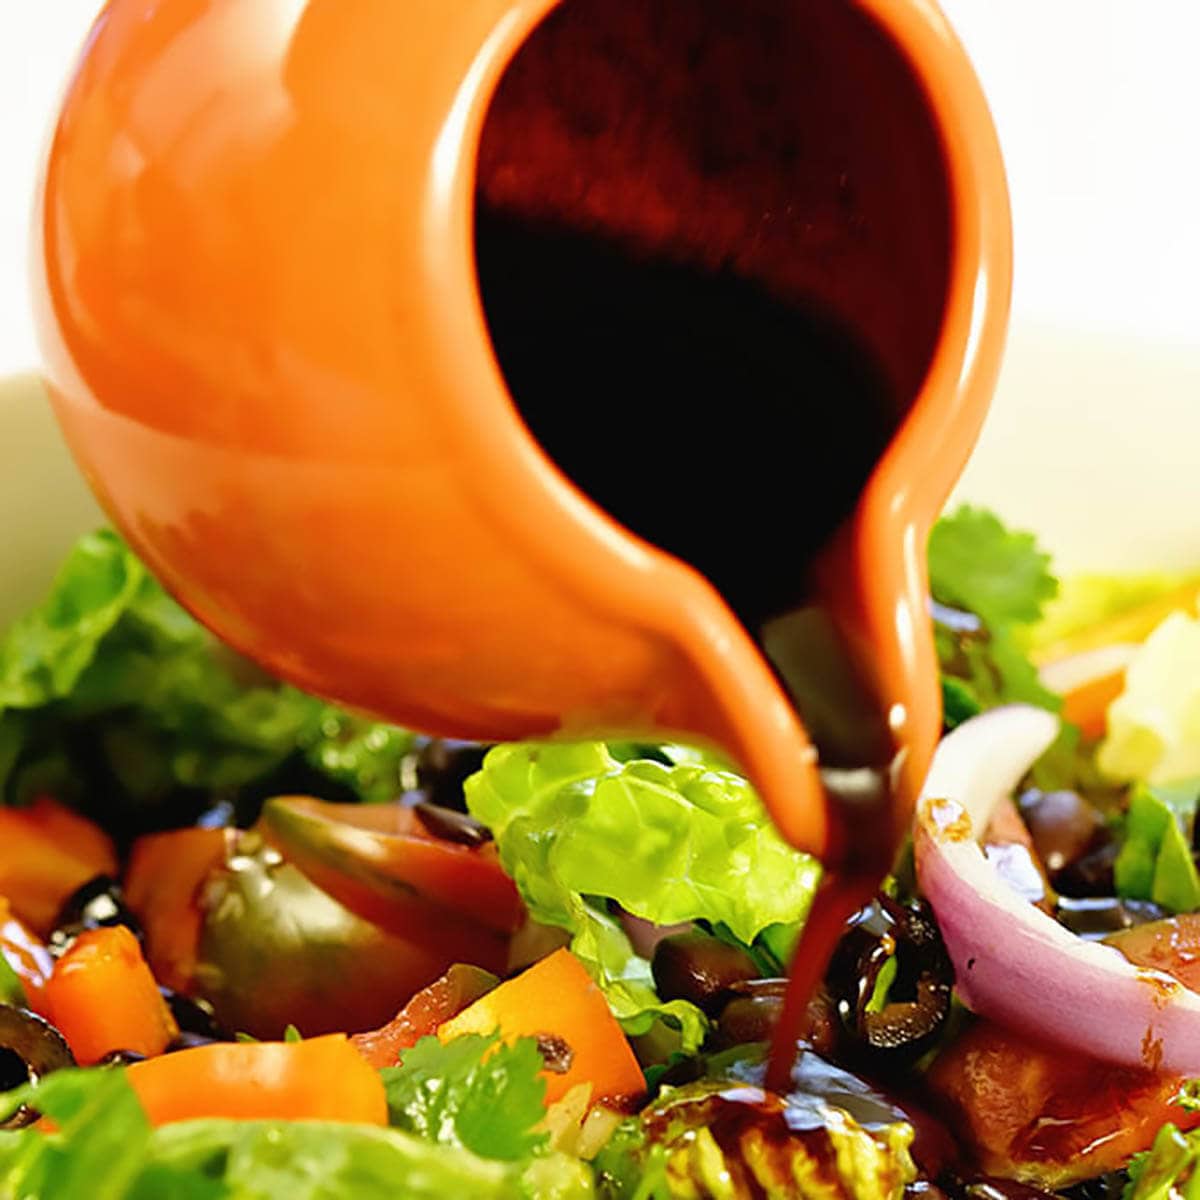 Spicy Balsamic Vinaigrette - A Unique Salad Dressing Recipe